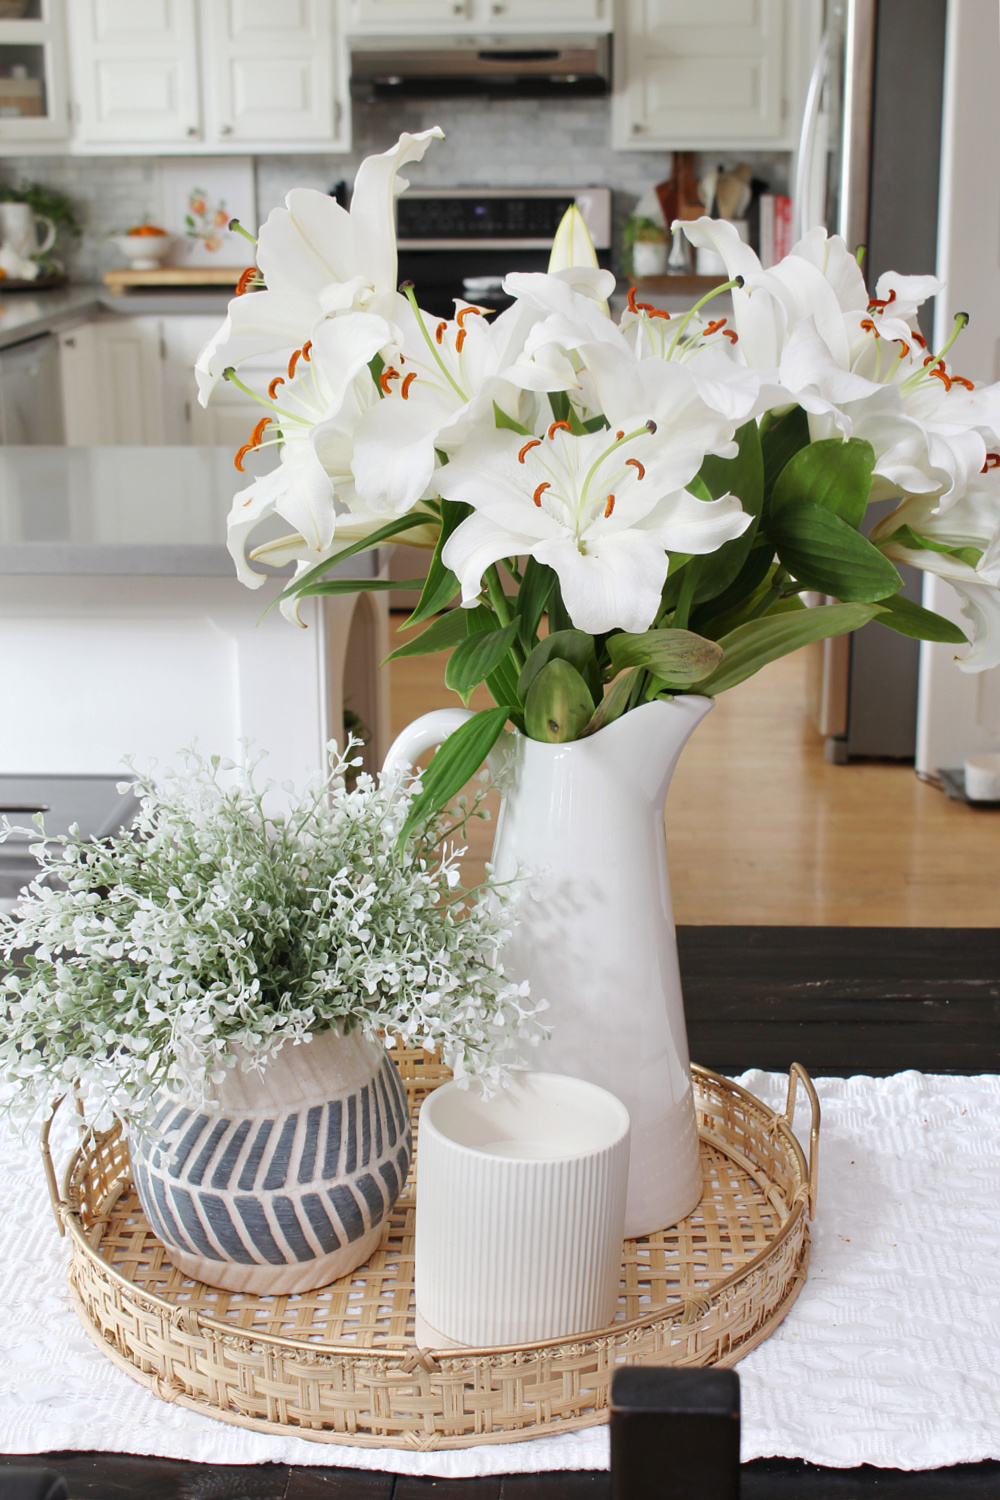 Summer centerpiece with white lillies.